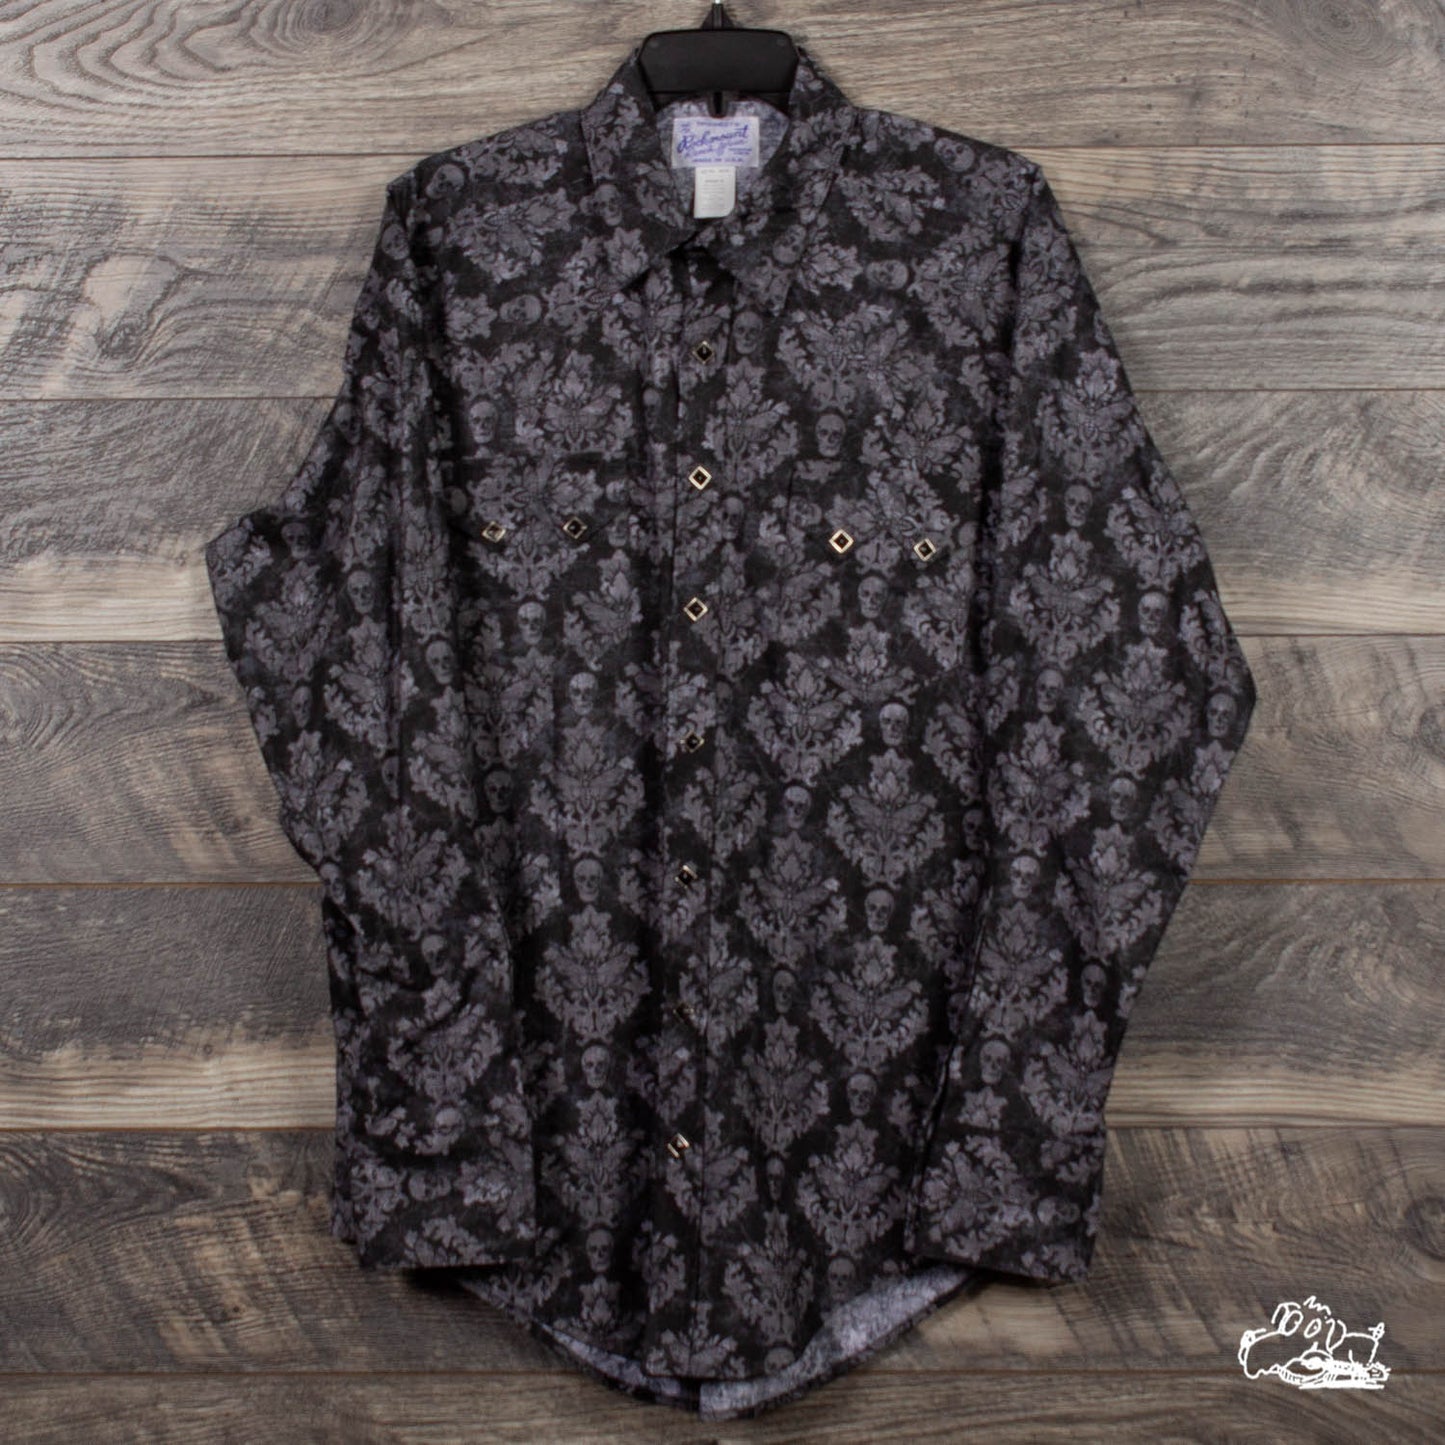 Rockmount Ranch Wear - Men's Charcoal Skulls & Moths Print Western Shirt